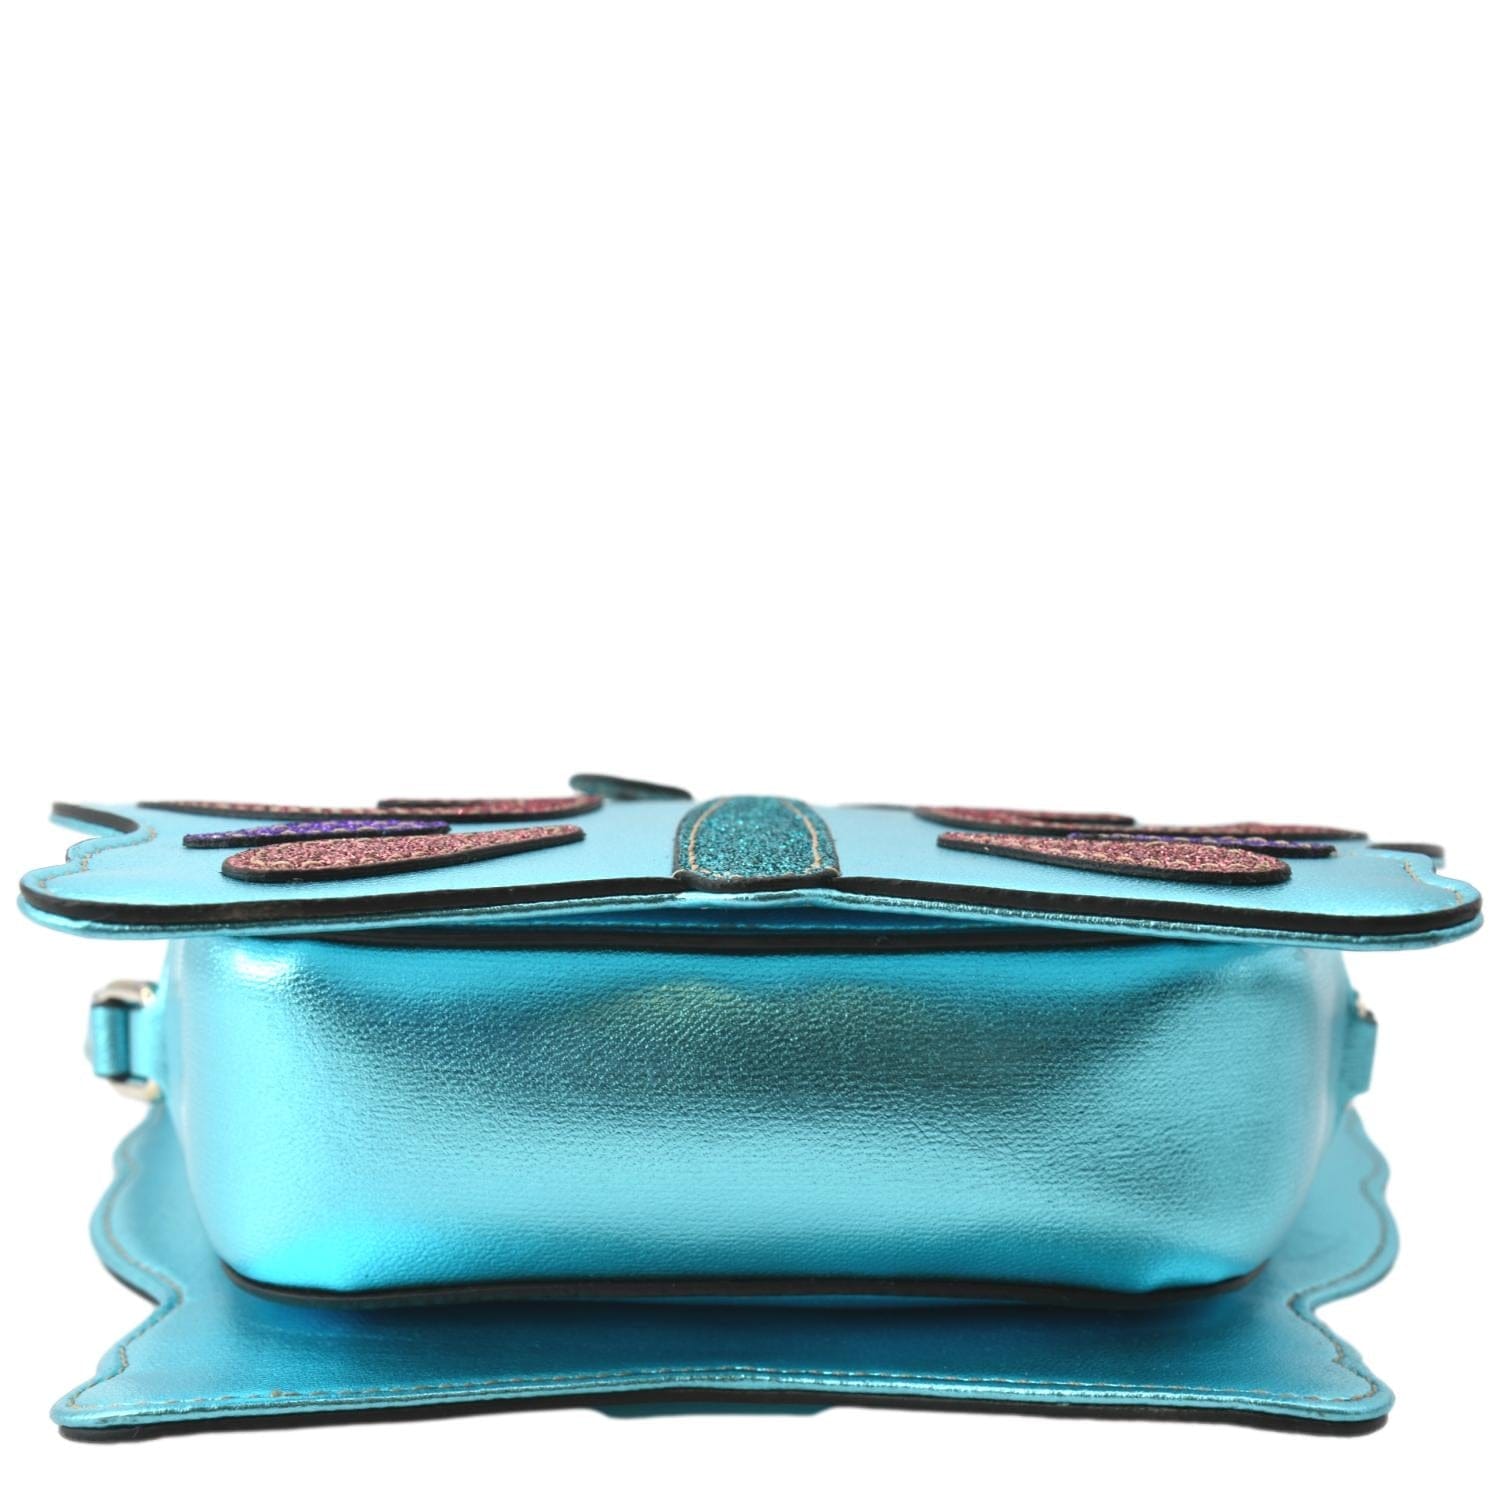 Blue Metallic Leather Shoulder Bag for Women - LaSacoche S Beetle